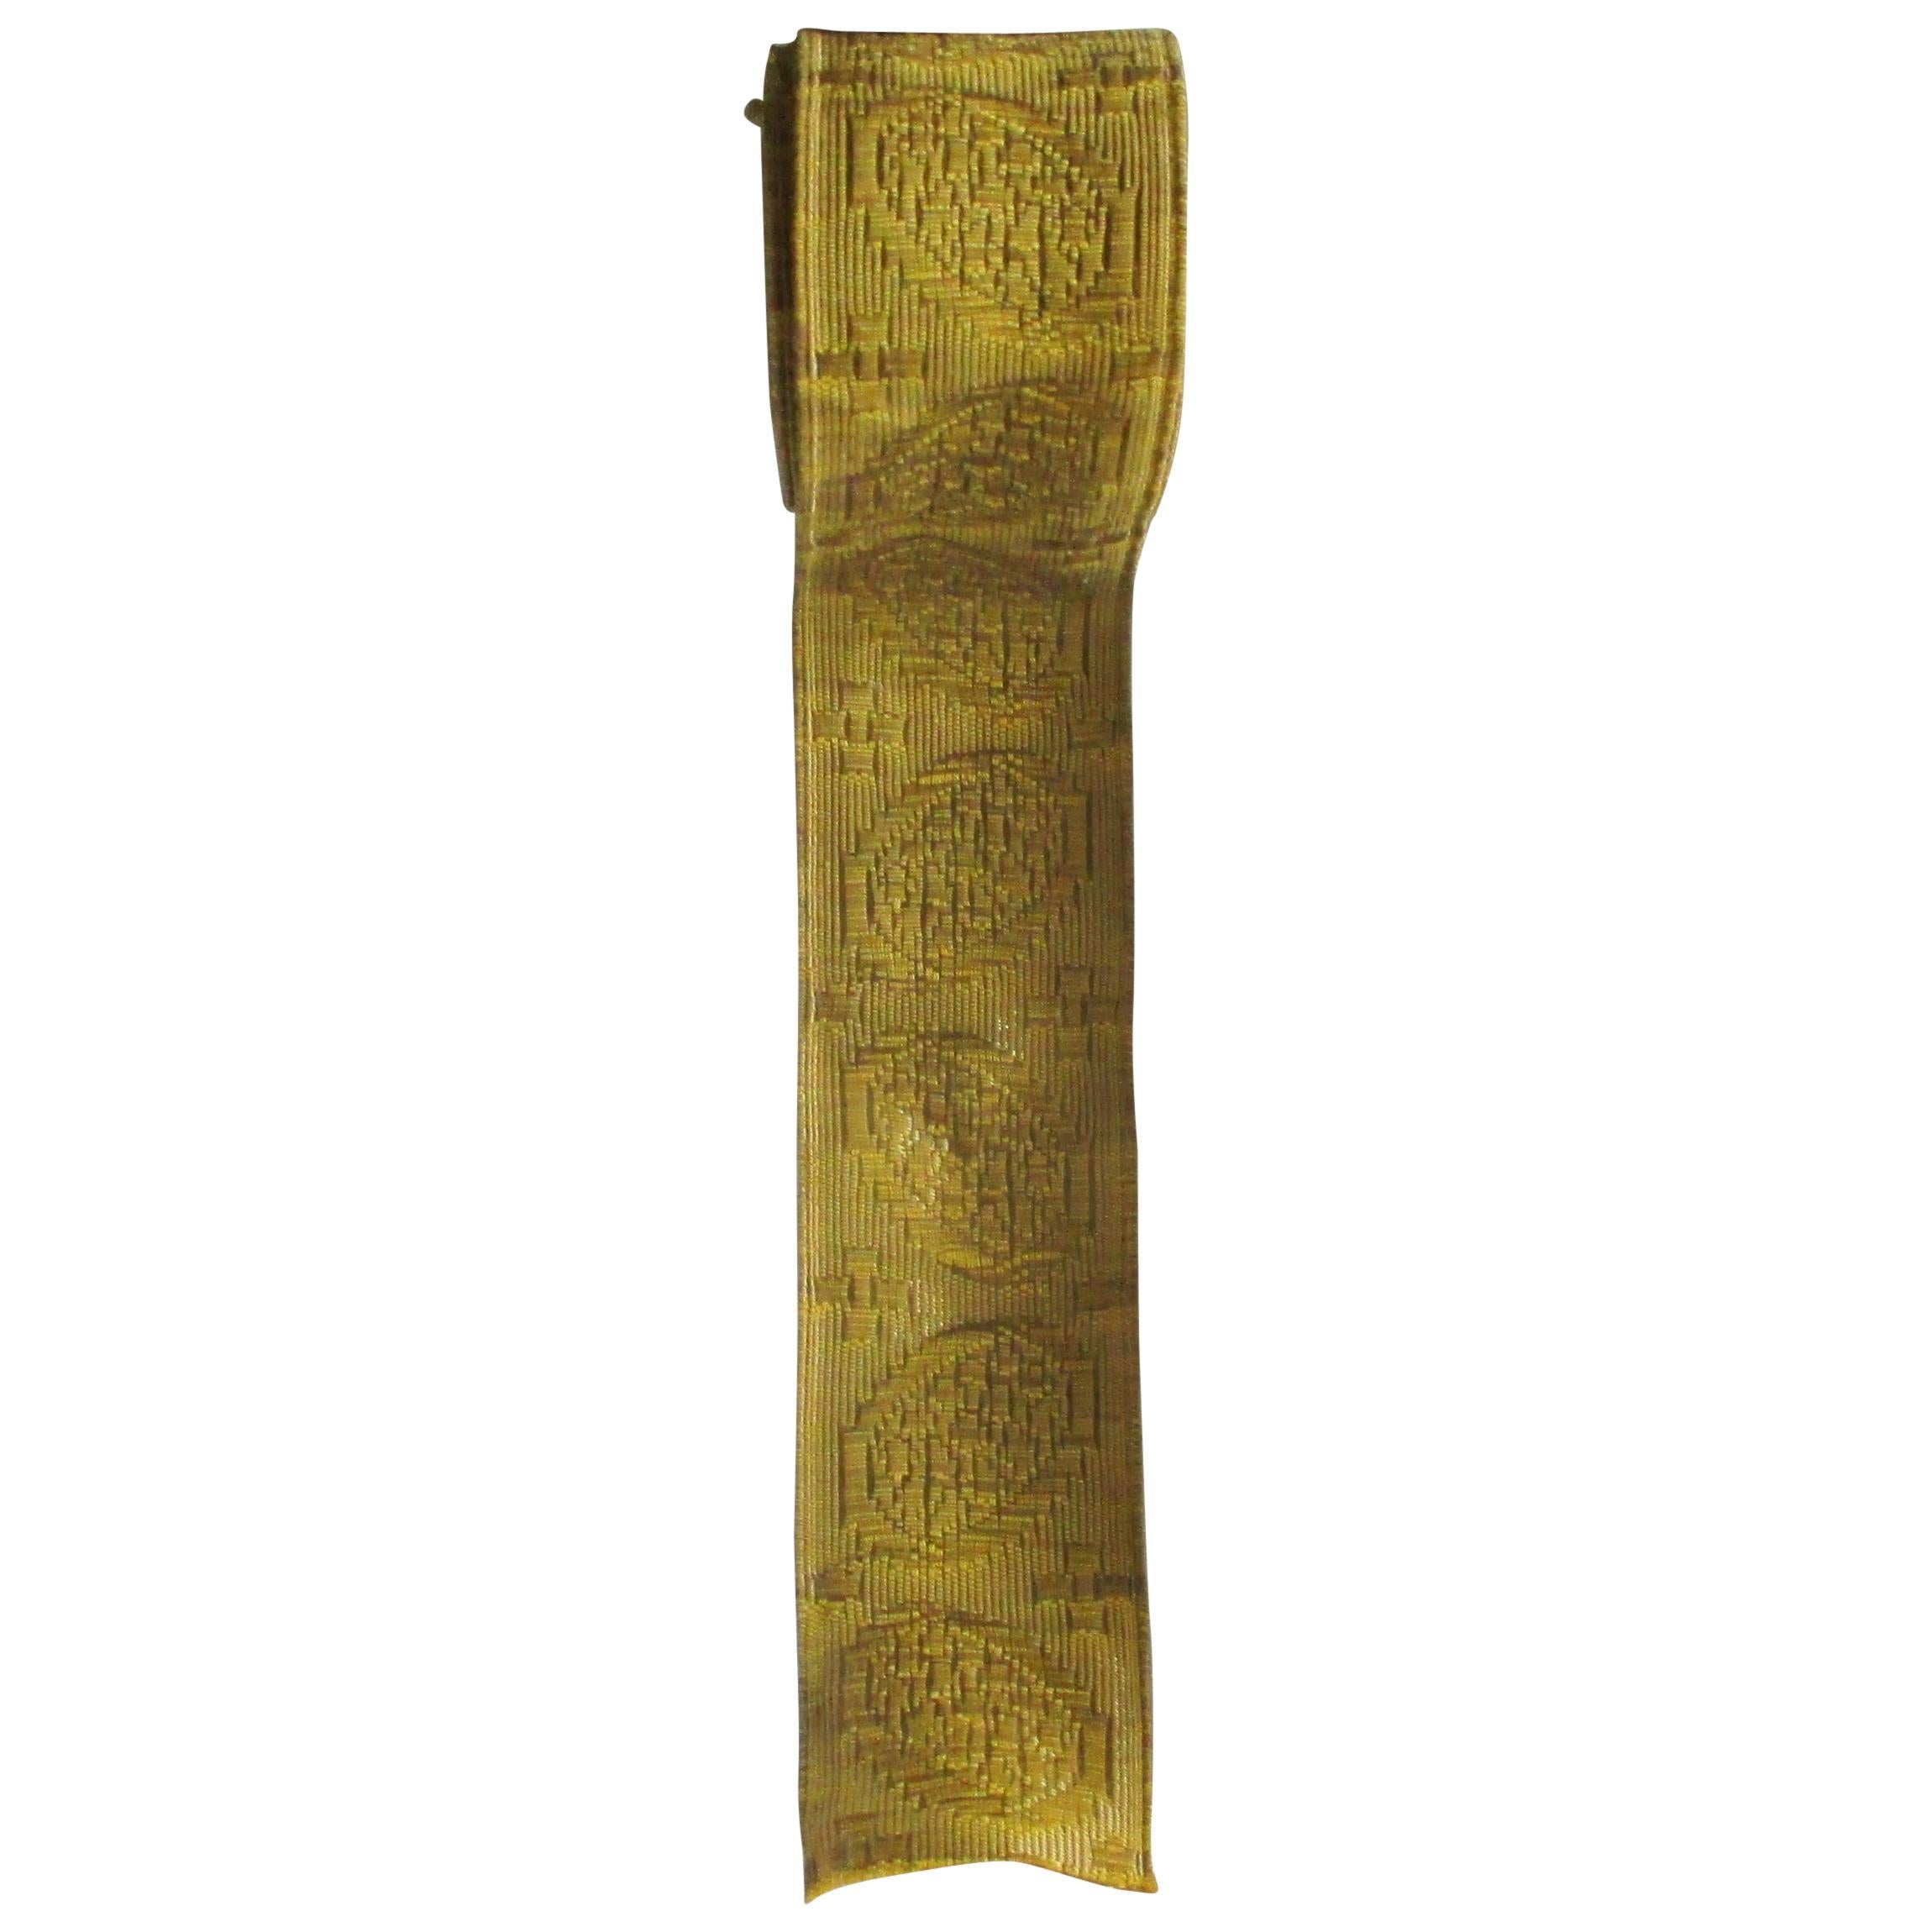 Antique Gold Metallic Threads Decorative Trim with High Relief